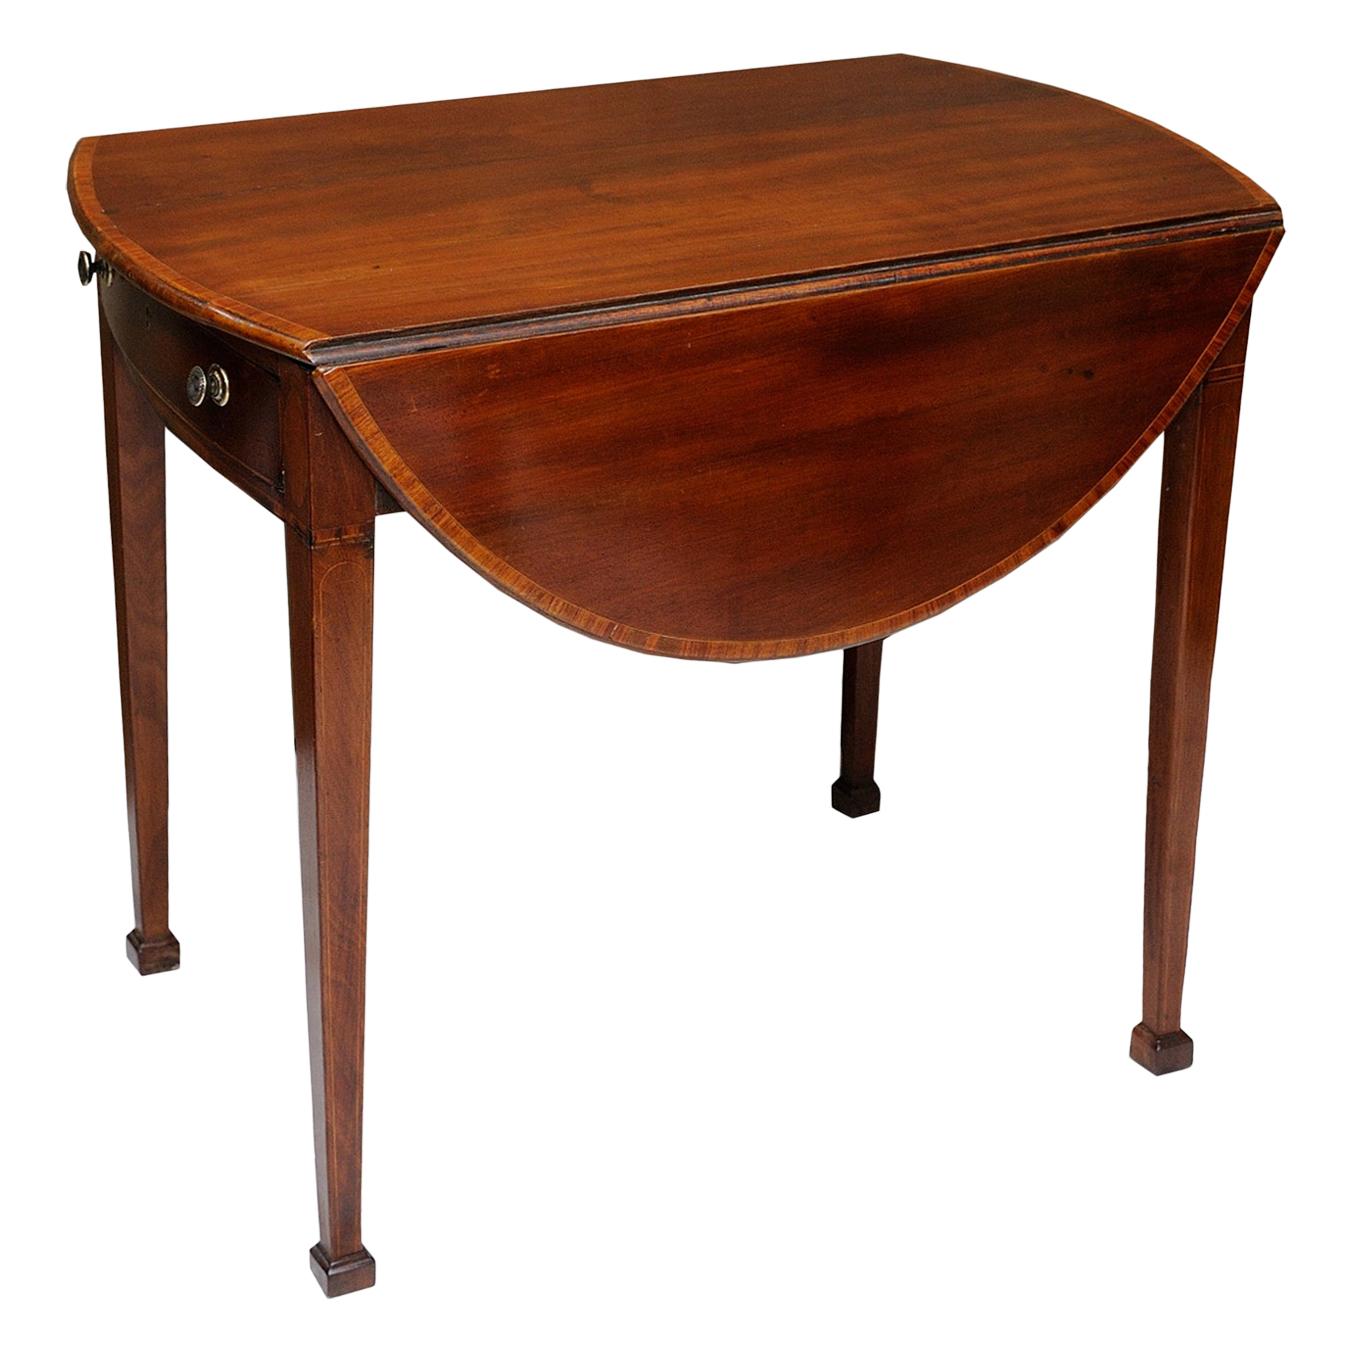 English George III Hepplewhite Period Mahogany Oval Pembroke Table, circa 1790 For Sale